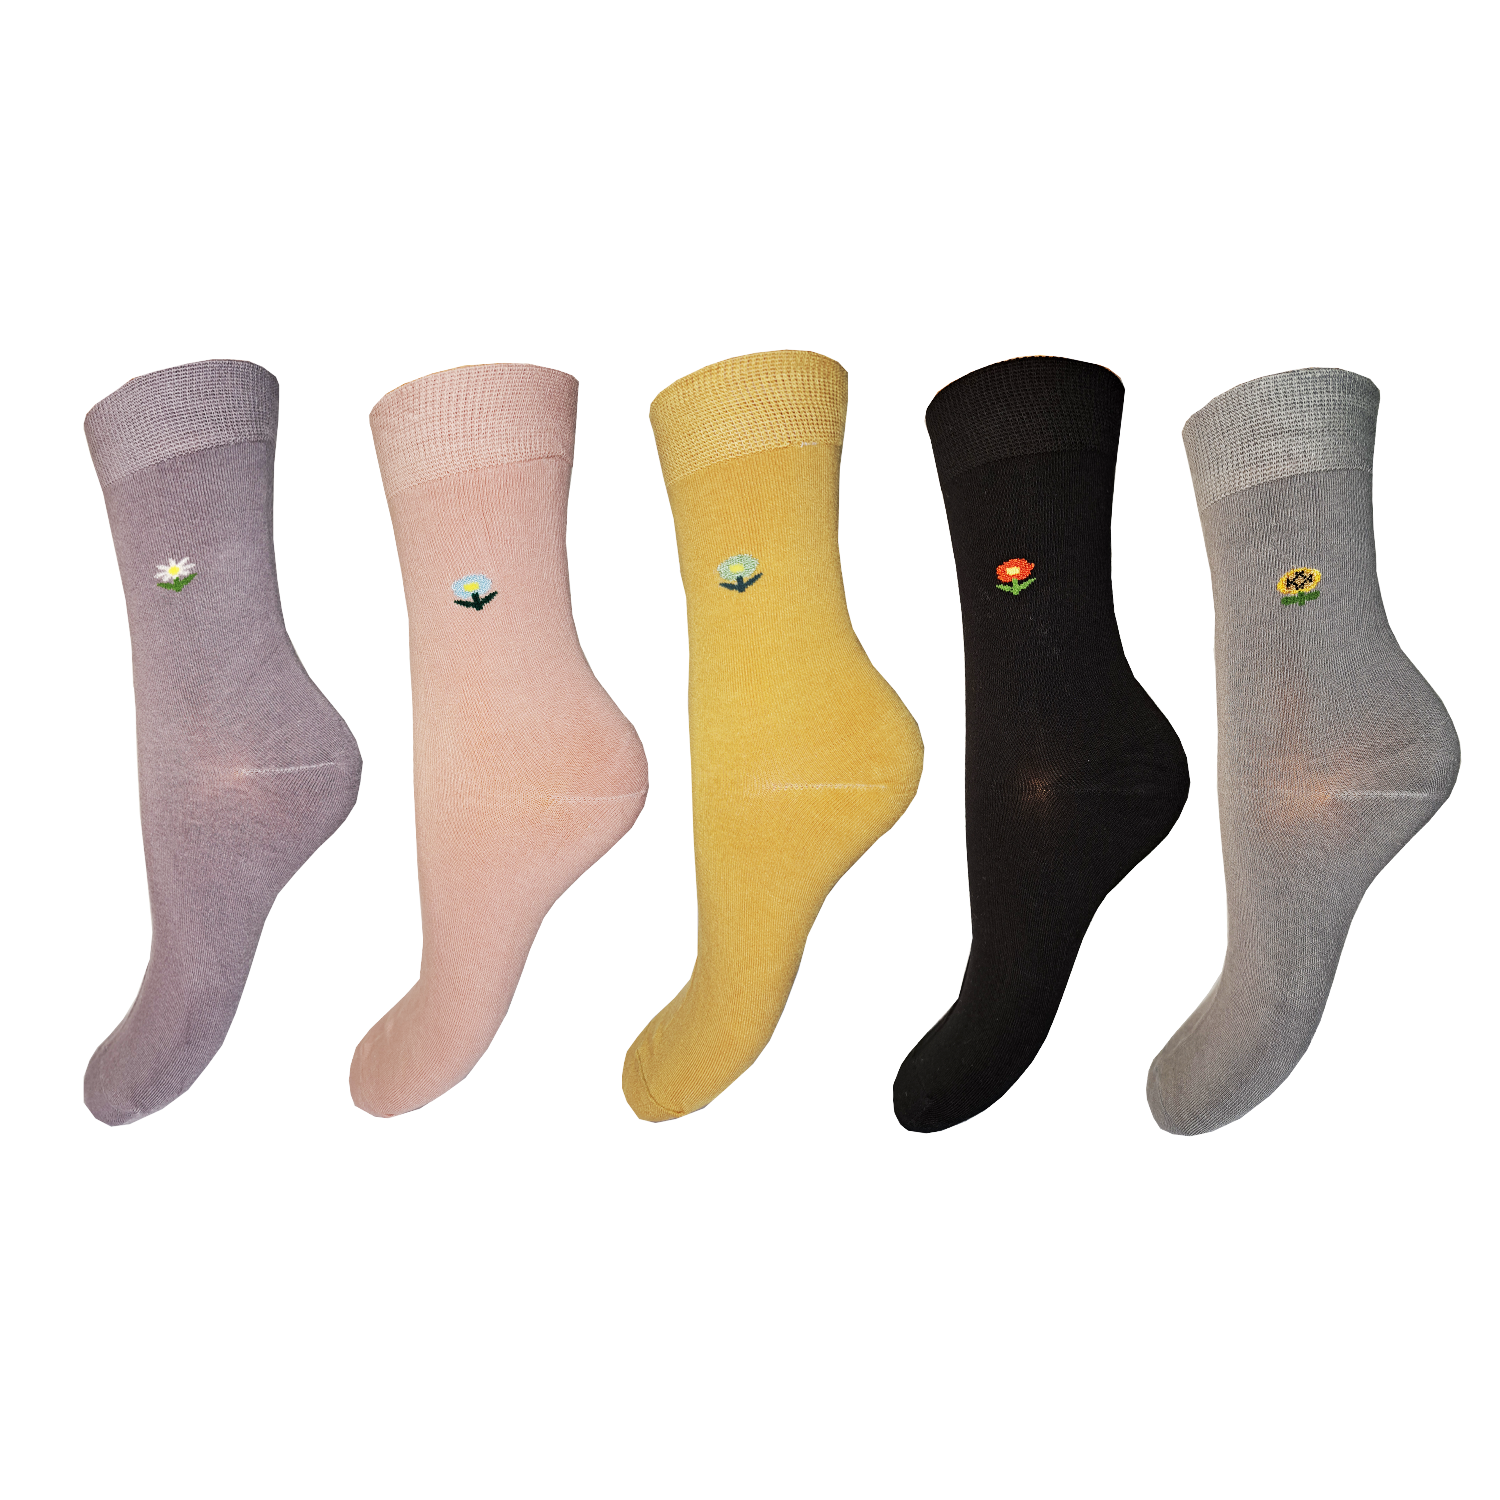 Dámské bambusové ponožky Aura.Via - NN7885, mix barev Barva: Mix barev, Velikost: 35-38